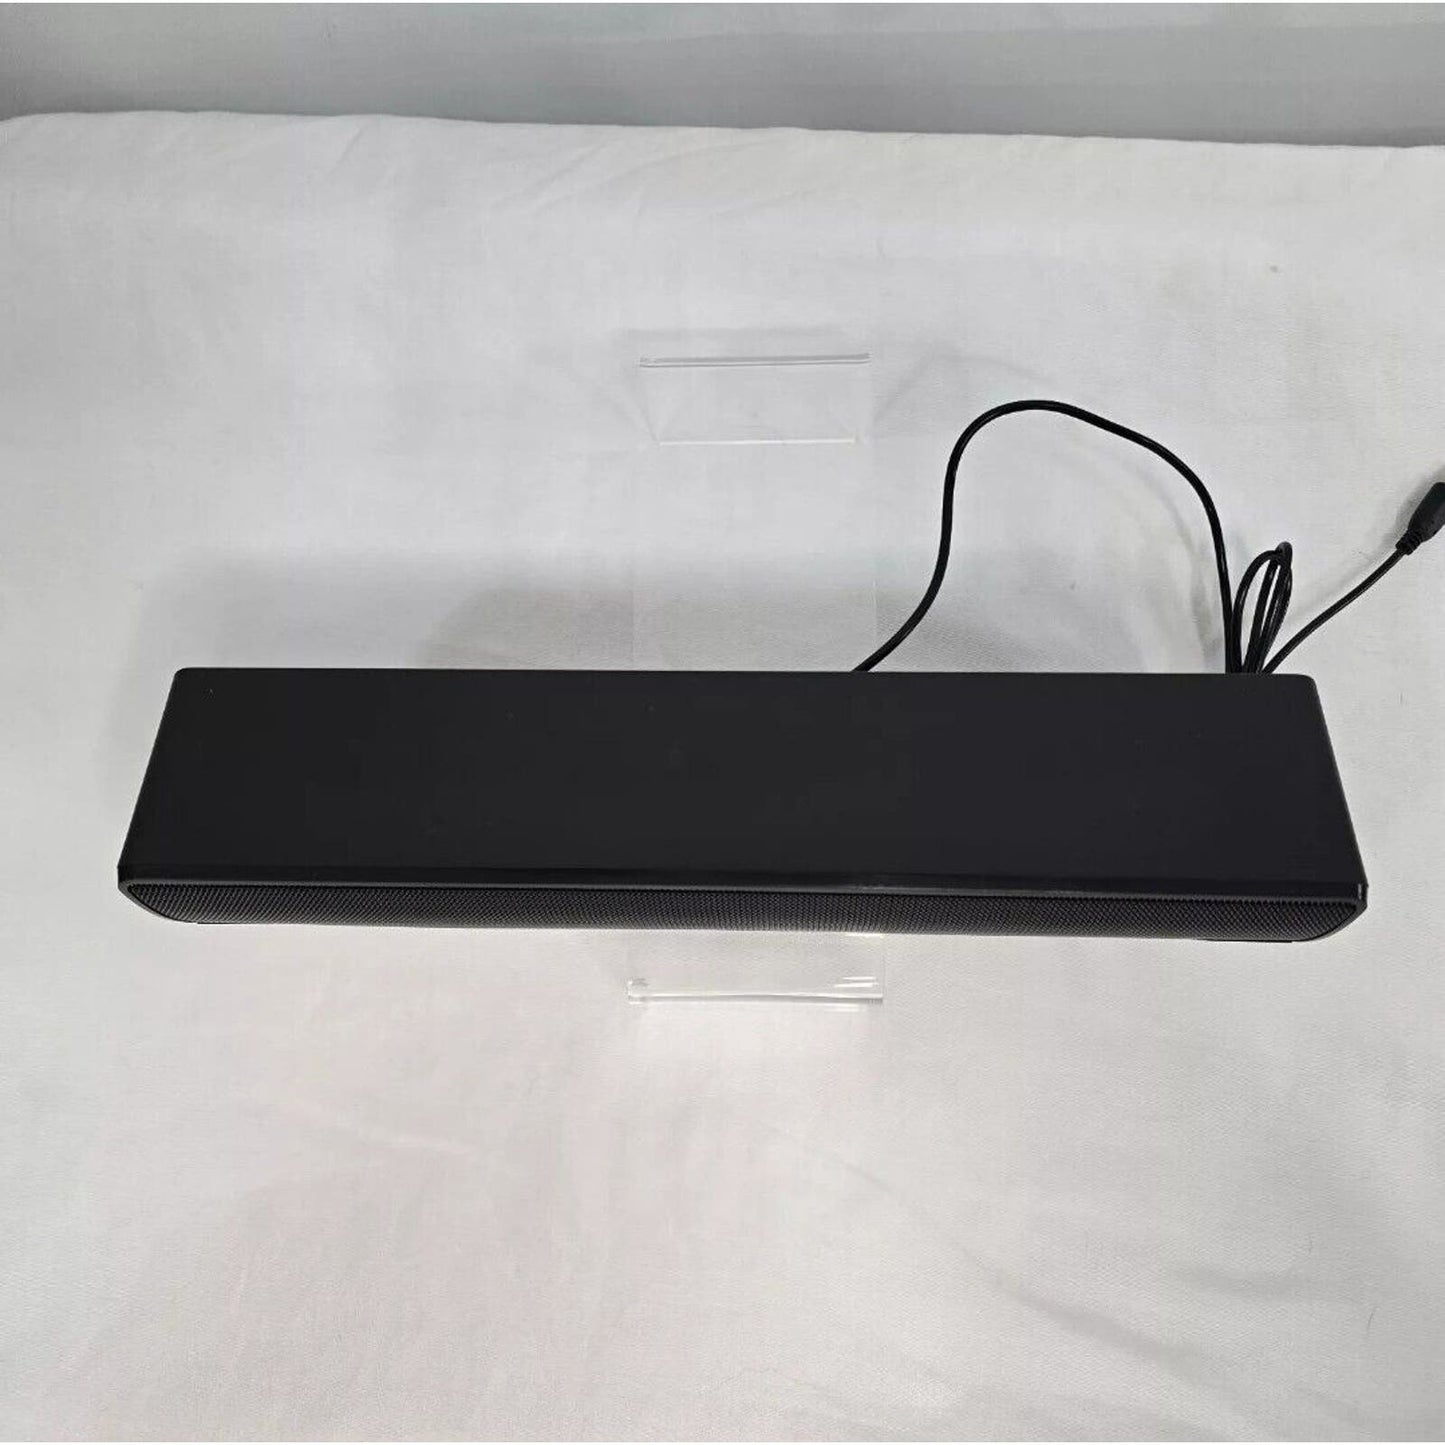 Soundbar, USB Powered, LED Lit, Black - Phission #FD0004 12"x2.5"x2.5"